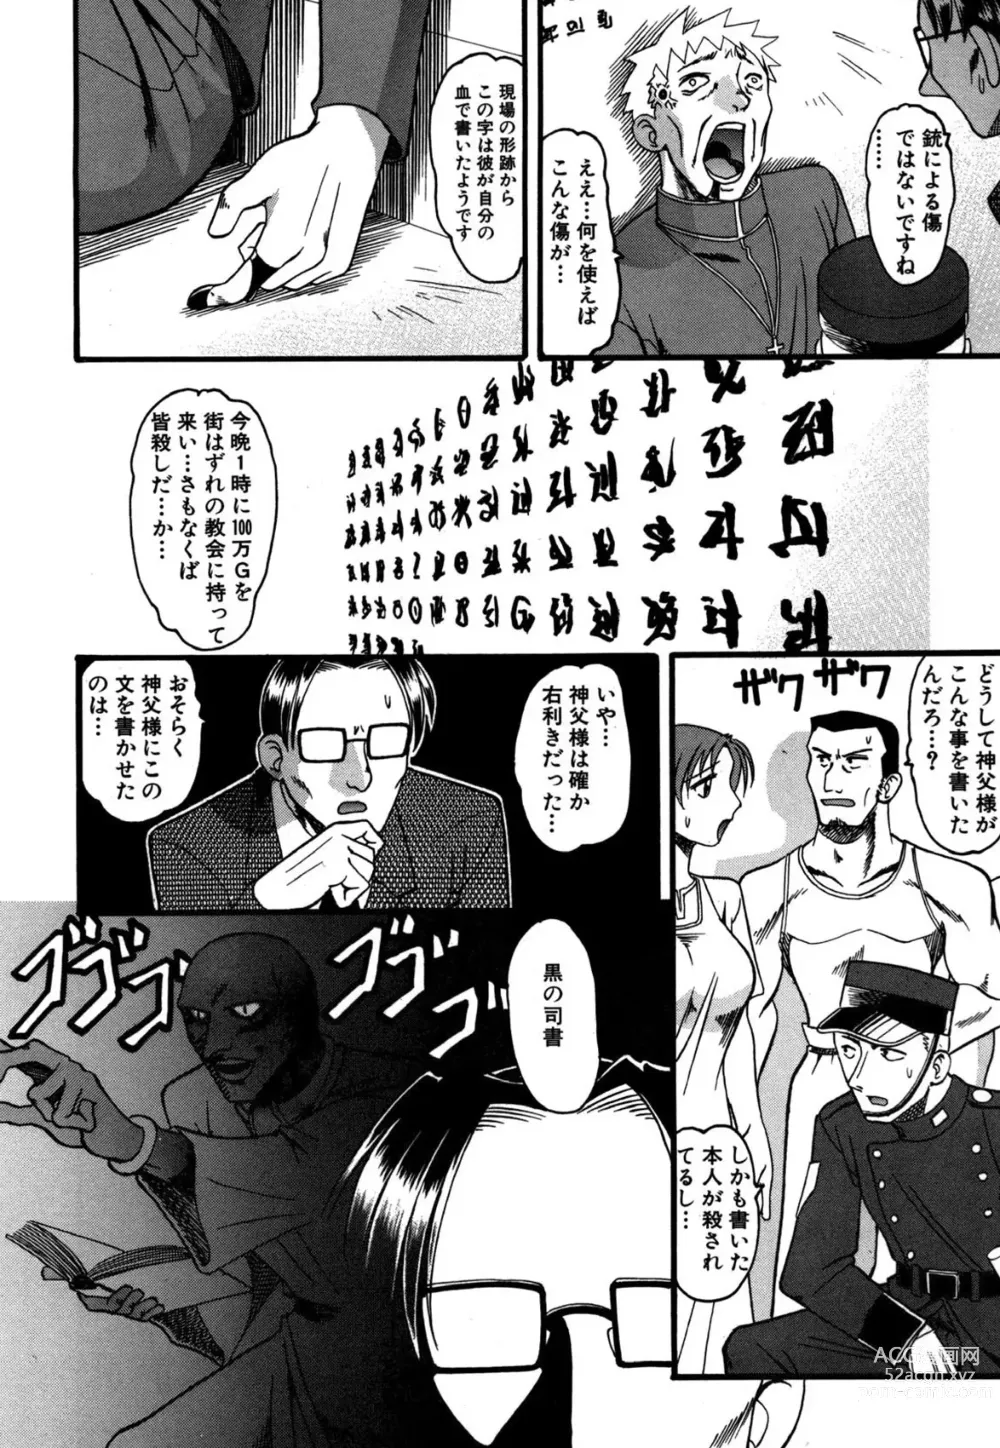 Page 7 of manga Mizugism